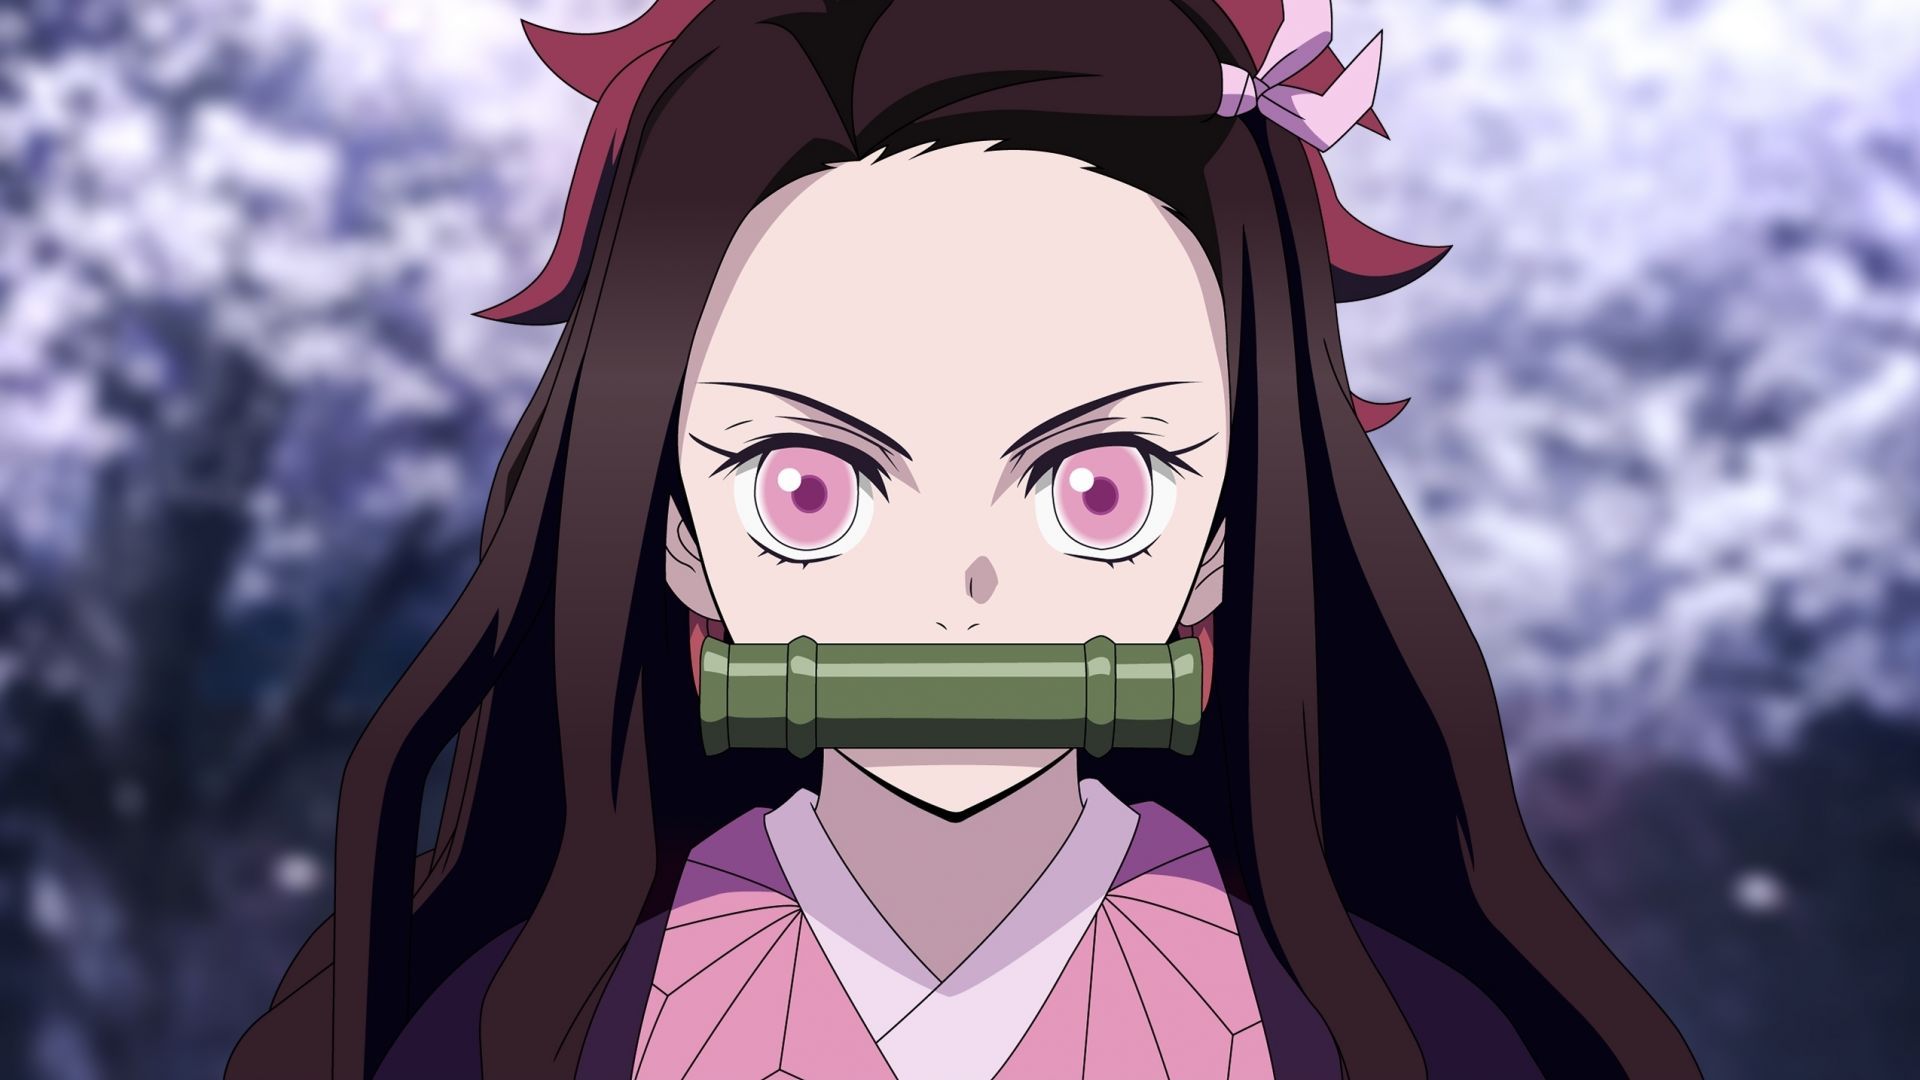 Angry kamado nezuko, pink eyes, anime girl wallpaper, HD image, picture, background, f4f82c